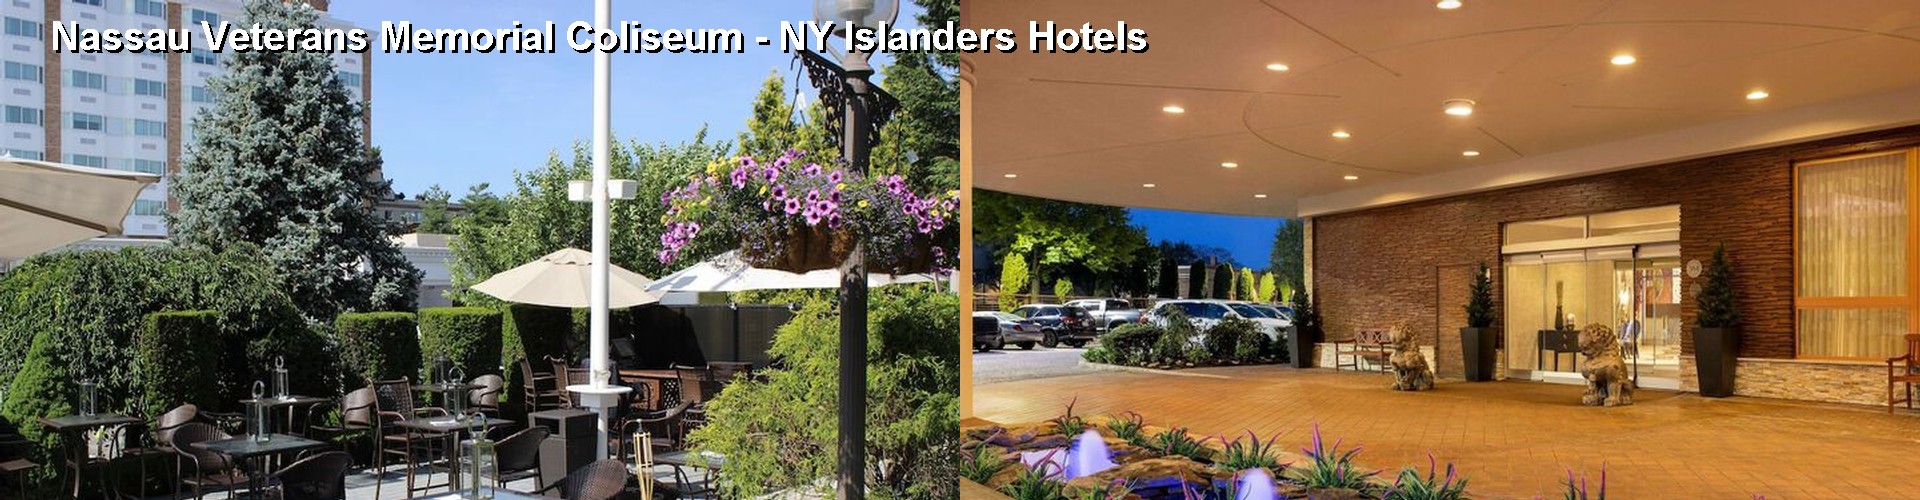 5 Best Hotels near Nassau Veterans Memorial Coliseum - NY Islanders